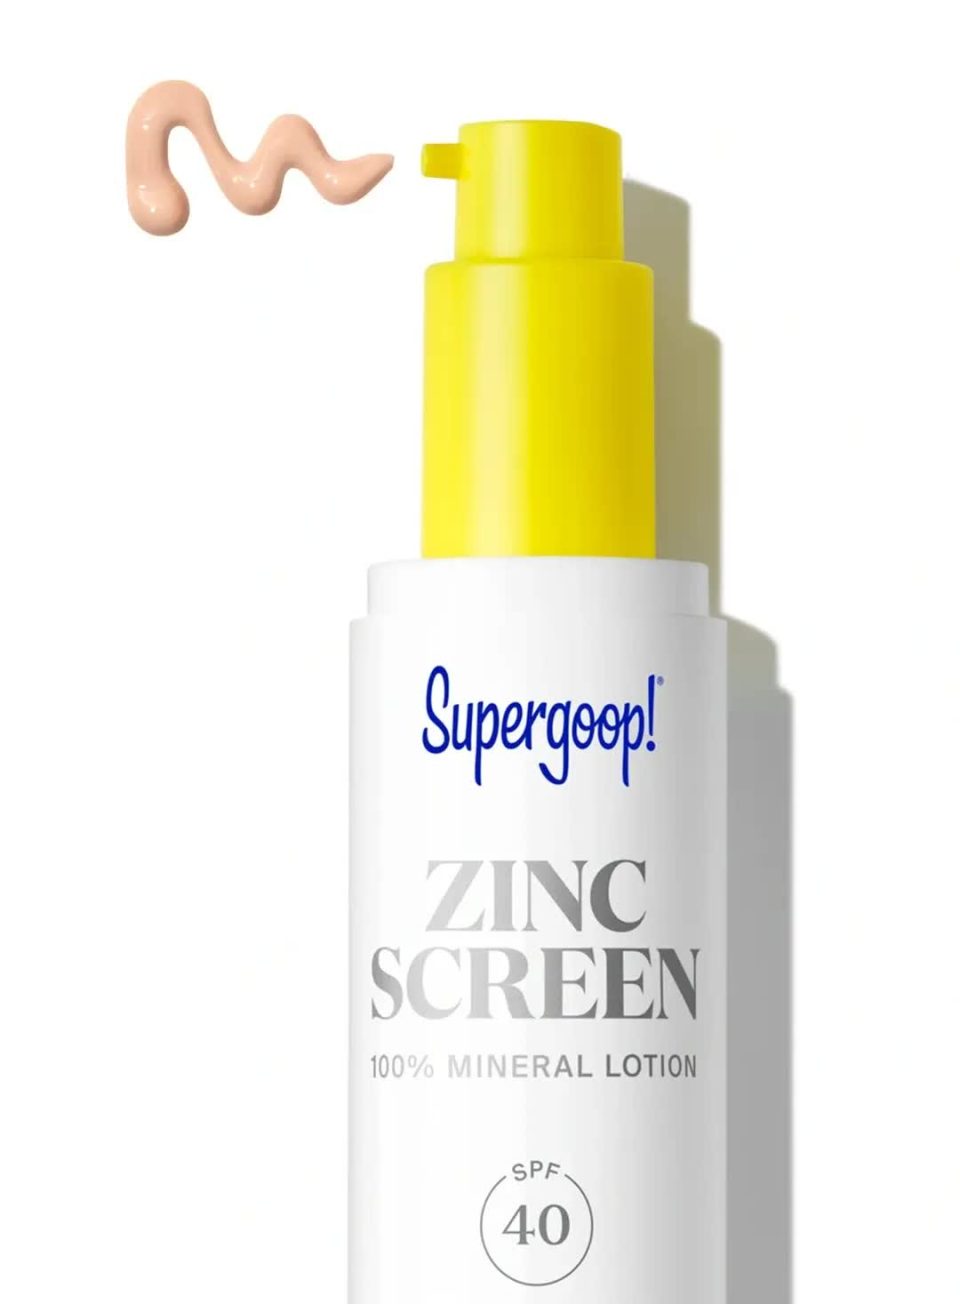 supergoop-zincscreen-100_-mineral-lotion-spf-40-yellow-applicator